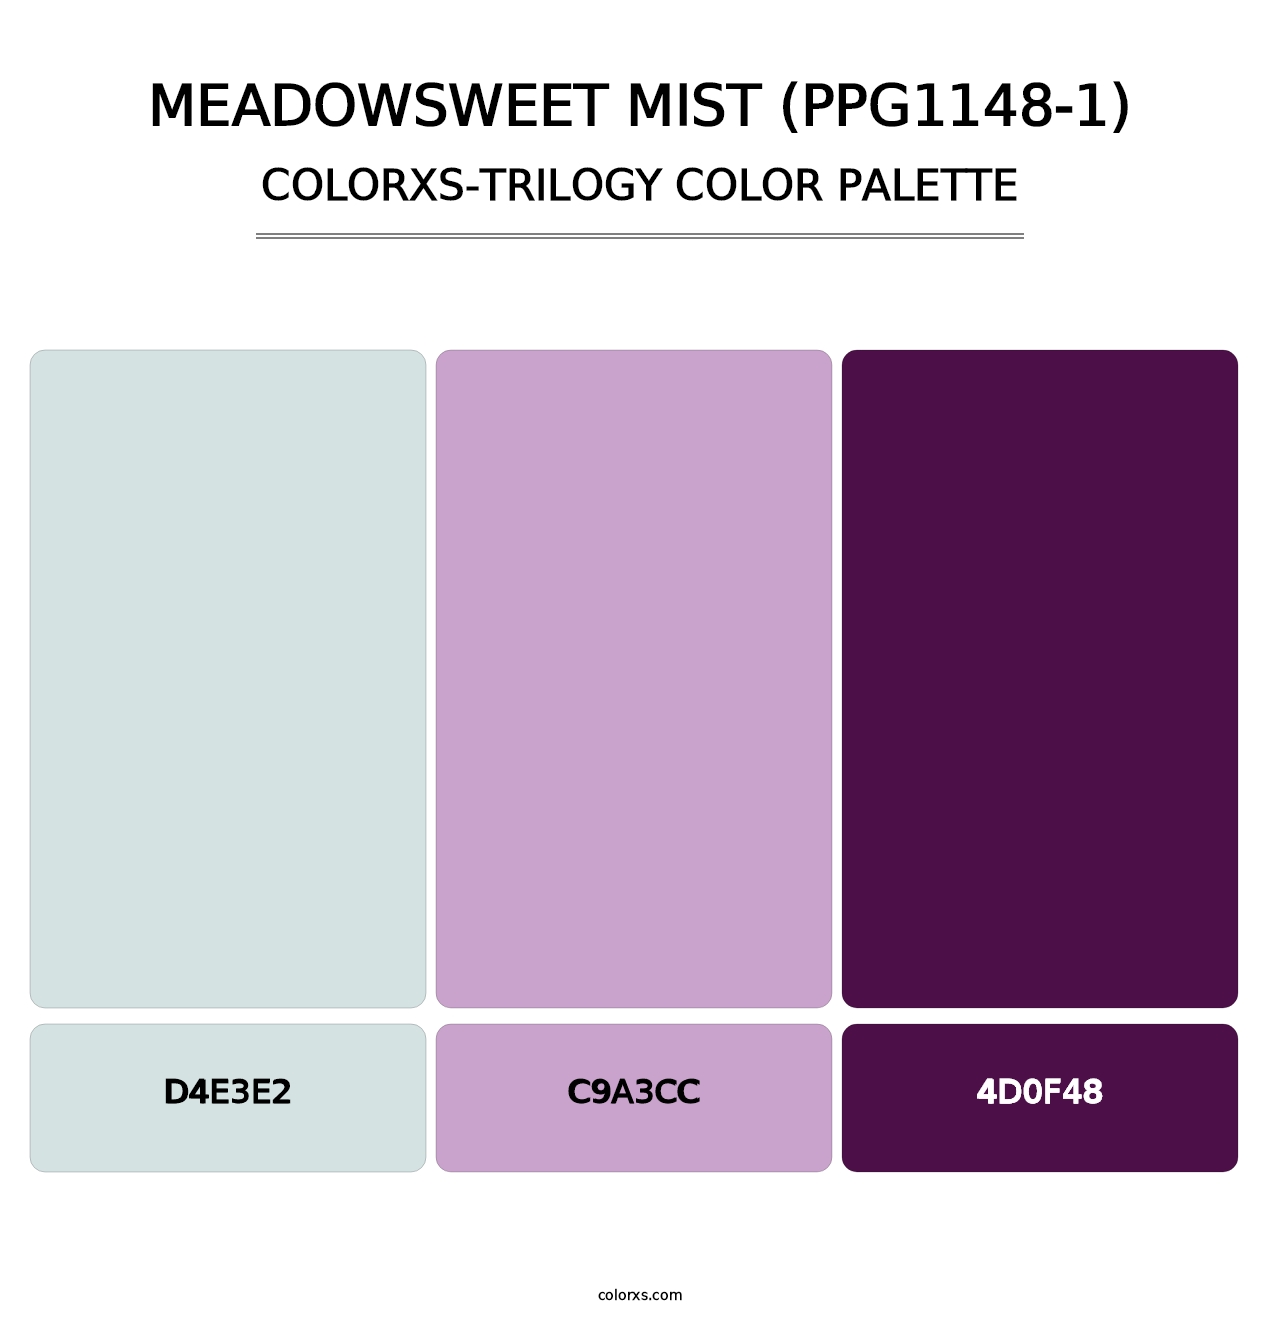 Meadowsweet Mist (PPG1148-1) - Colorxs Trilogy Palette